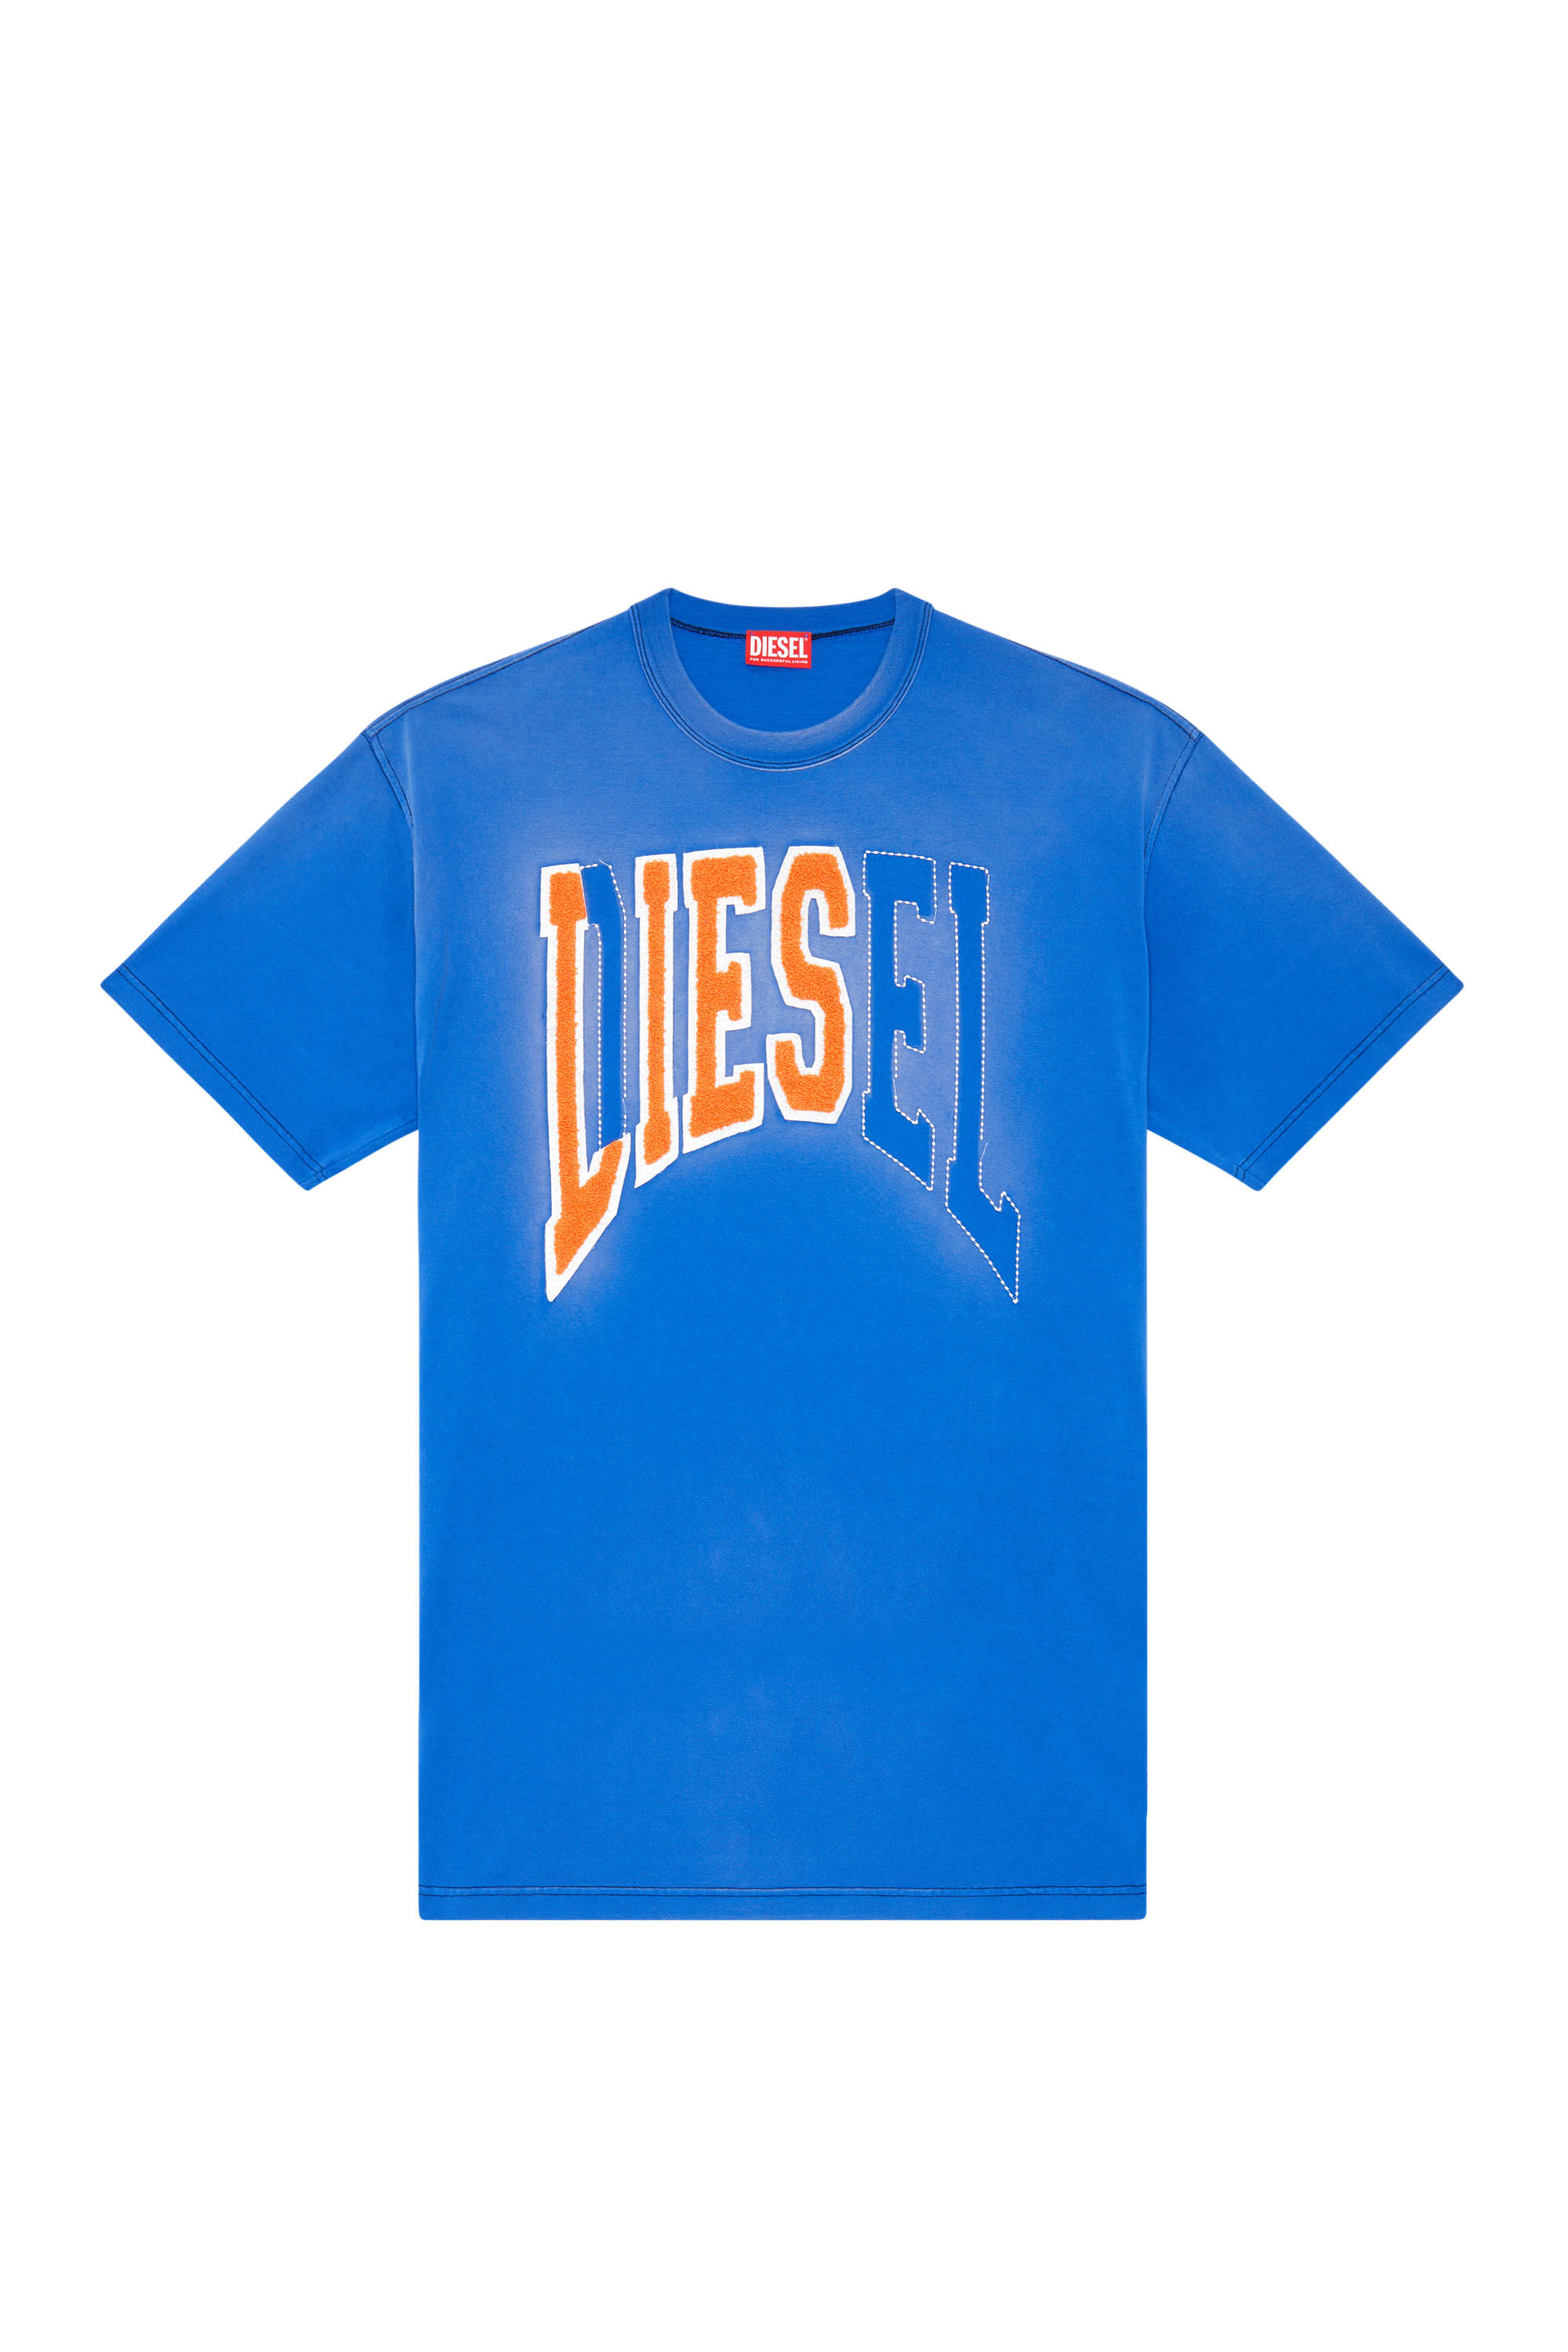 Diesel - T-WASH-N, Homme T-shirt oversize avec logo Diesel Lies in Bleu - Image 2